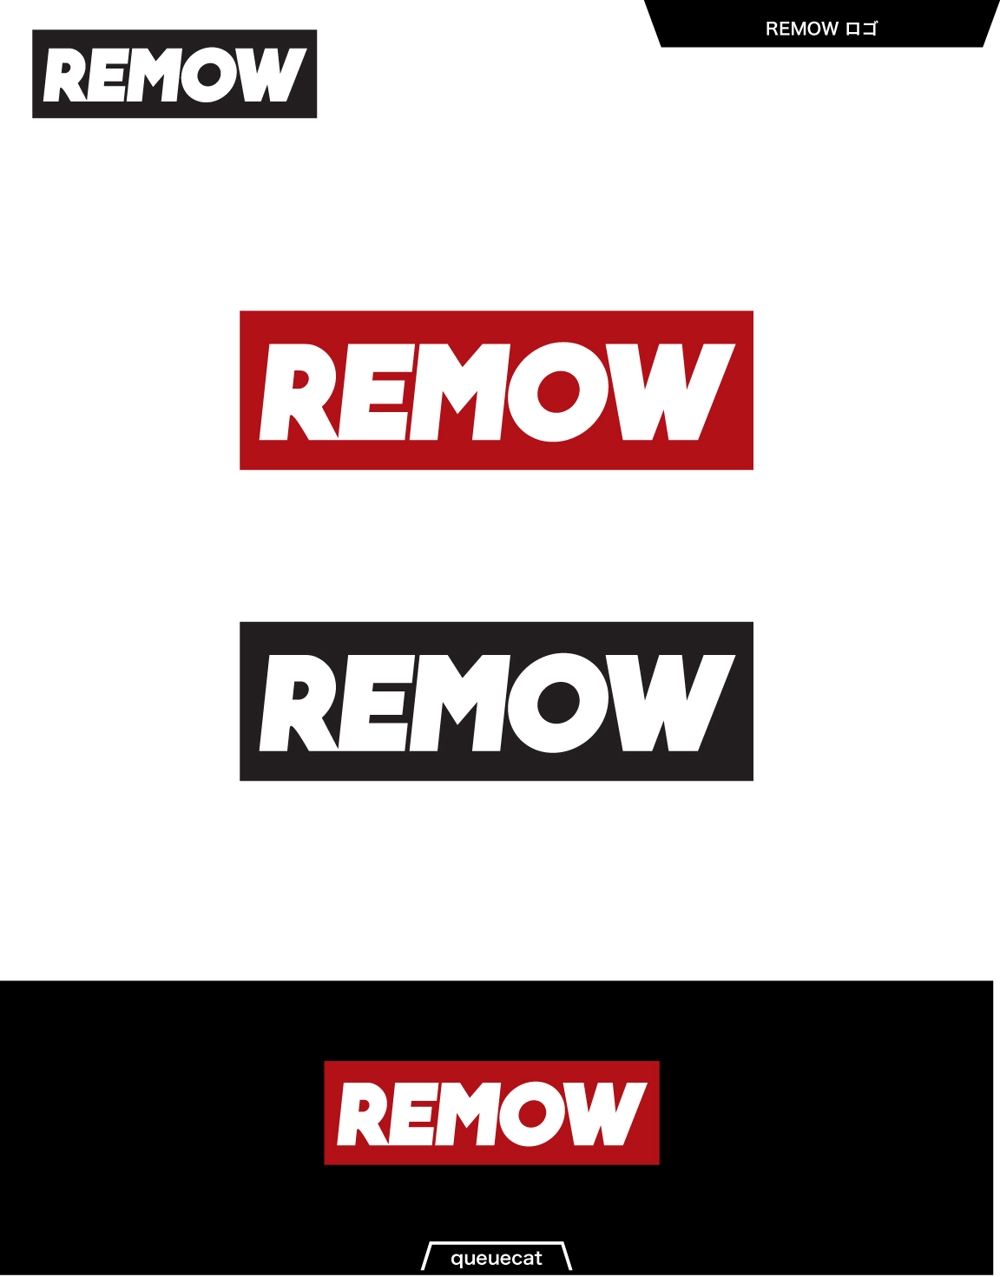 REMOW1_1.jpg